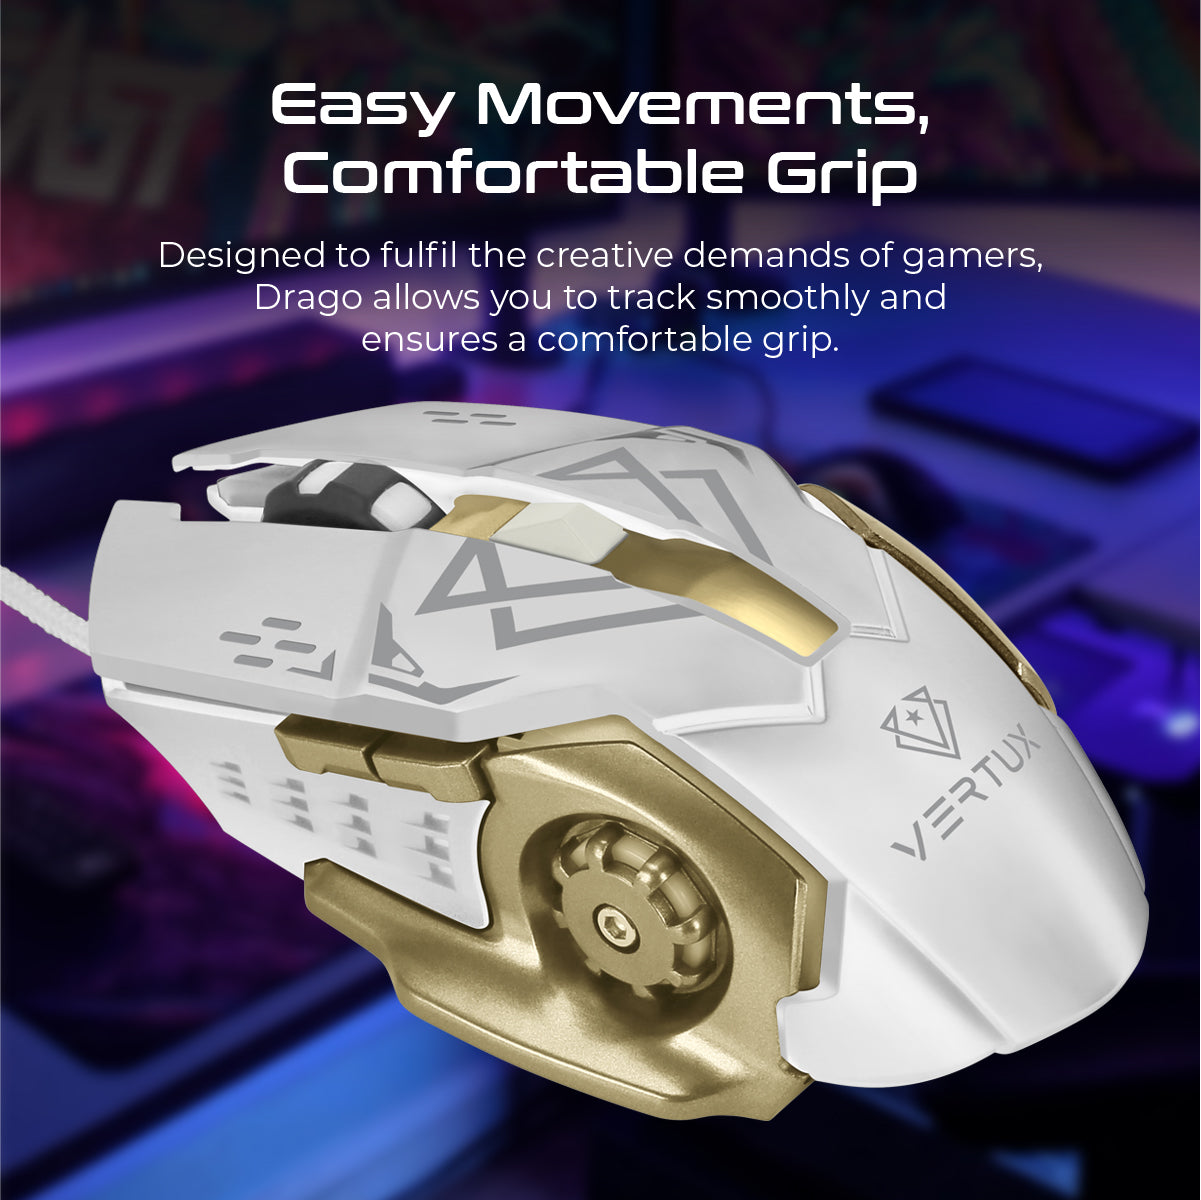 Precision Tracking Ergonomic Gaming Mouse